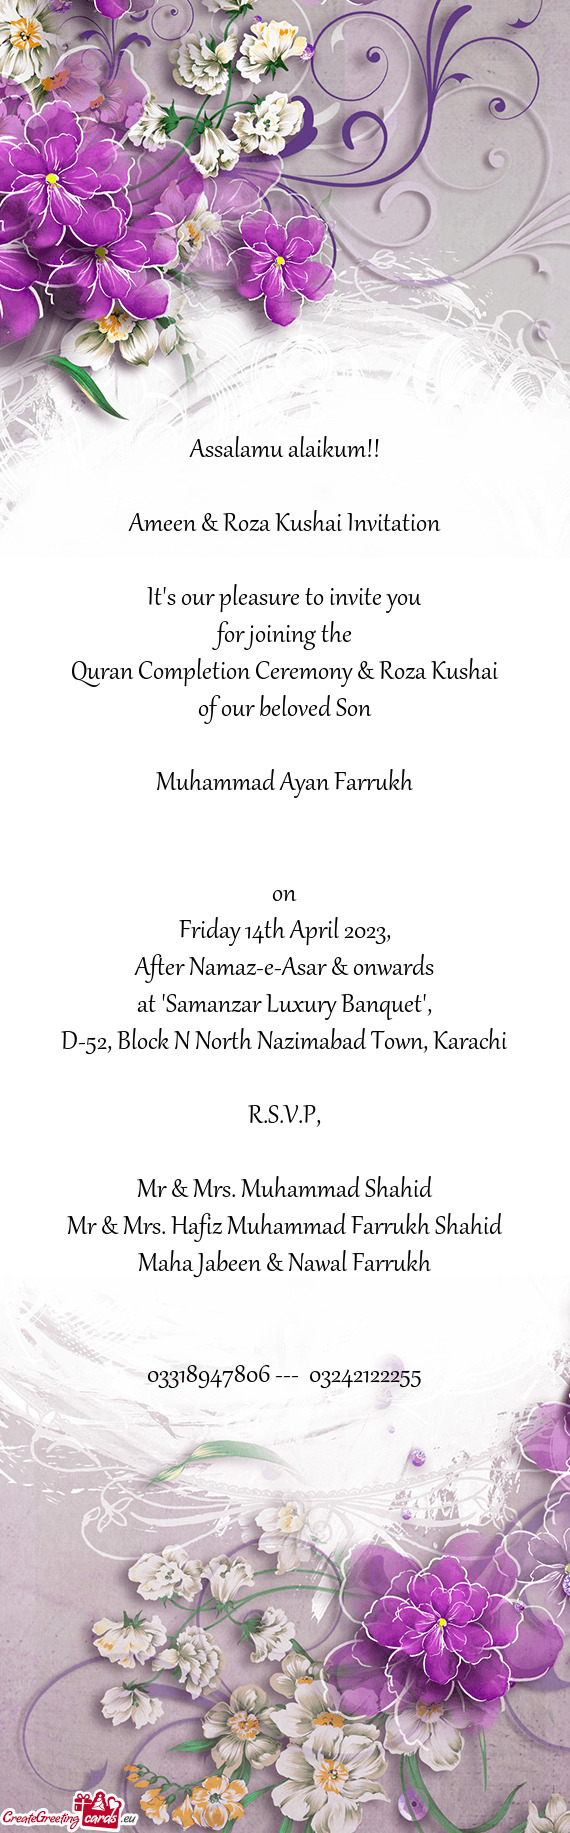 Quran Completion Ceremony & Roza Kushai